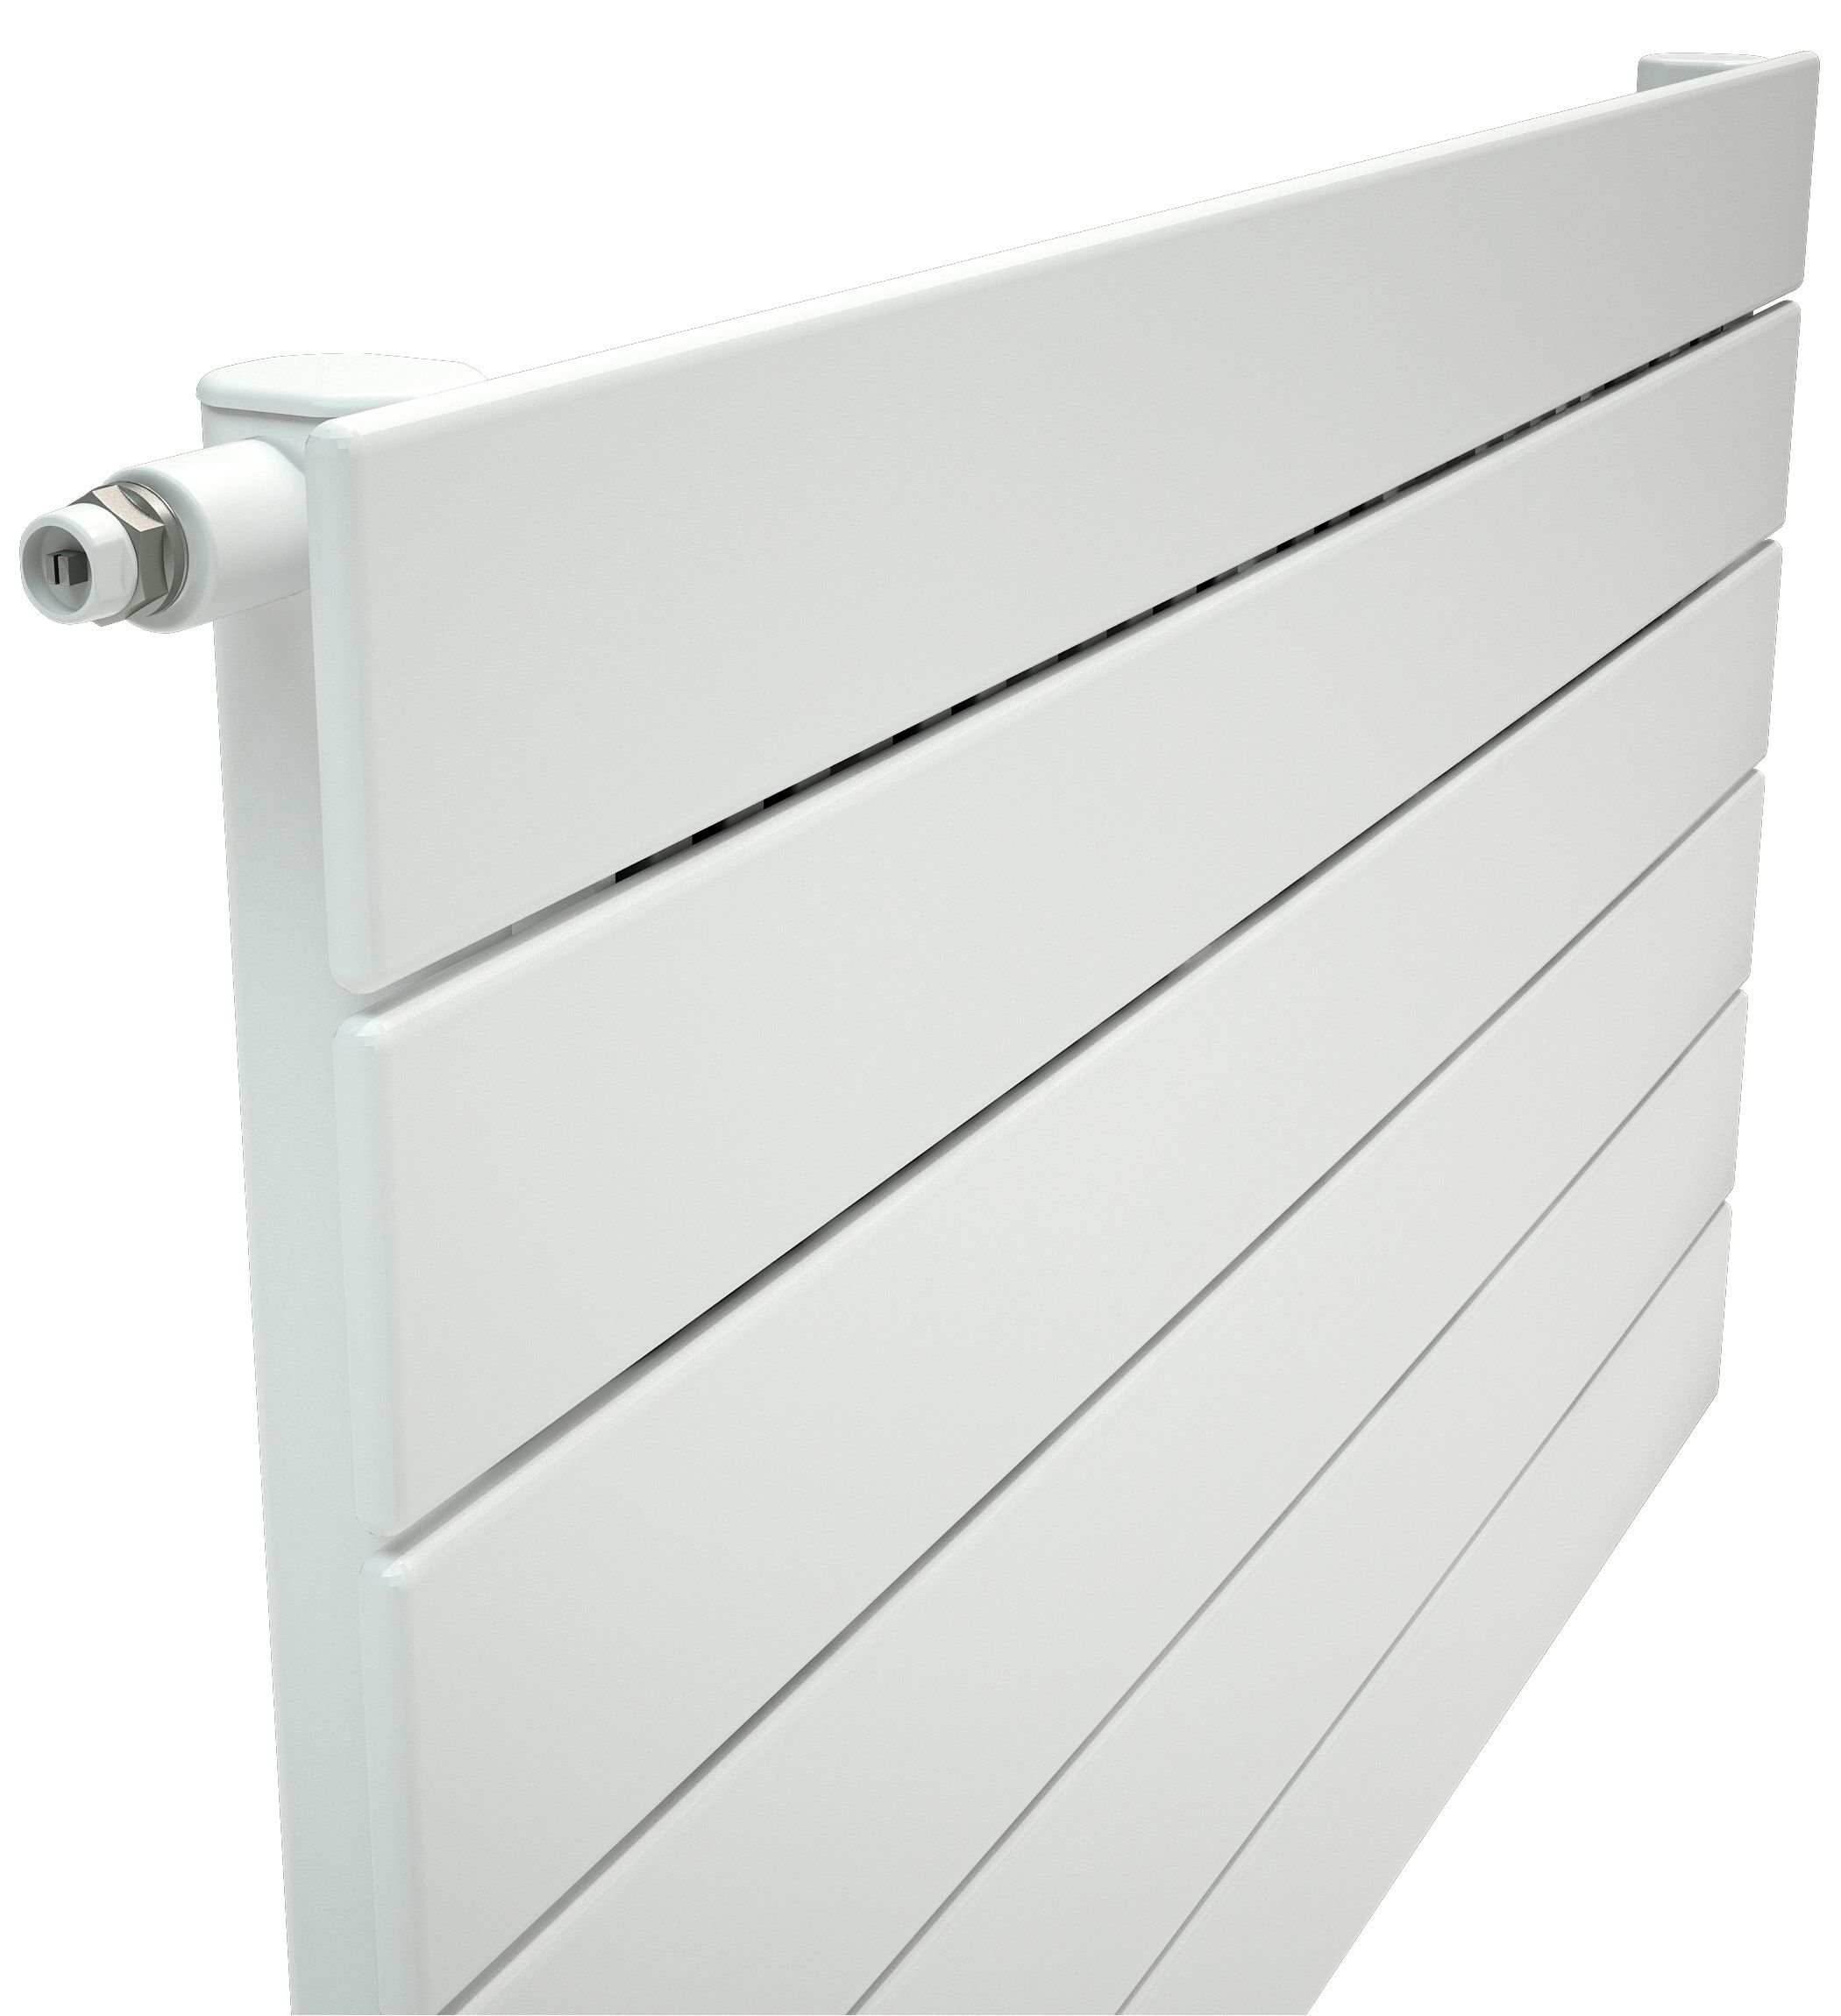 Image of Henrad Verona Single Panel Designer Radiator - White 592 x 1200 mm